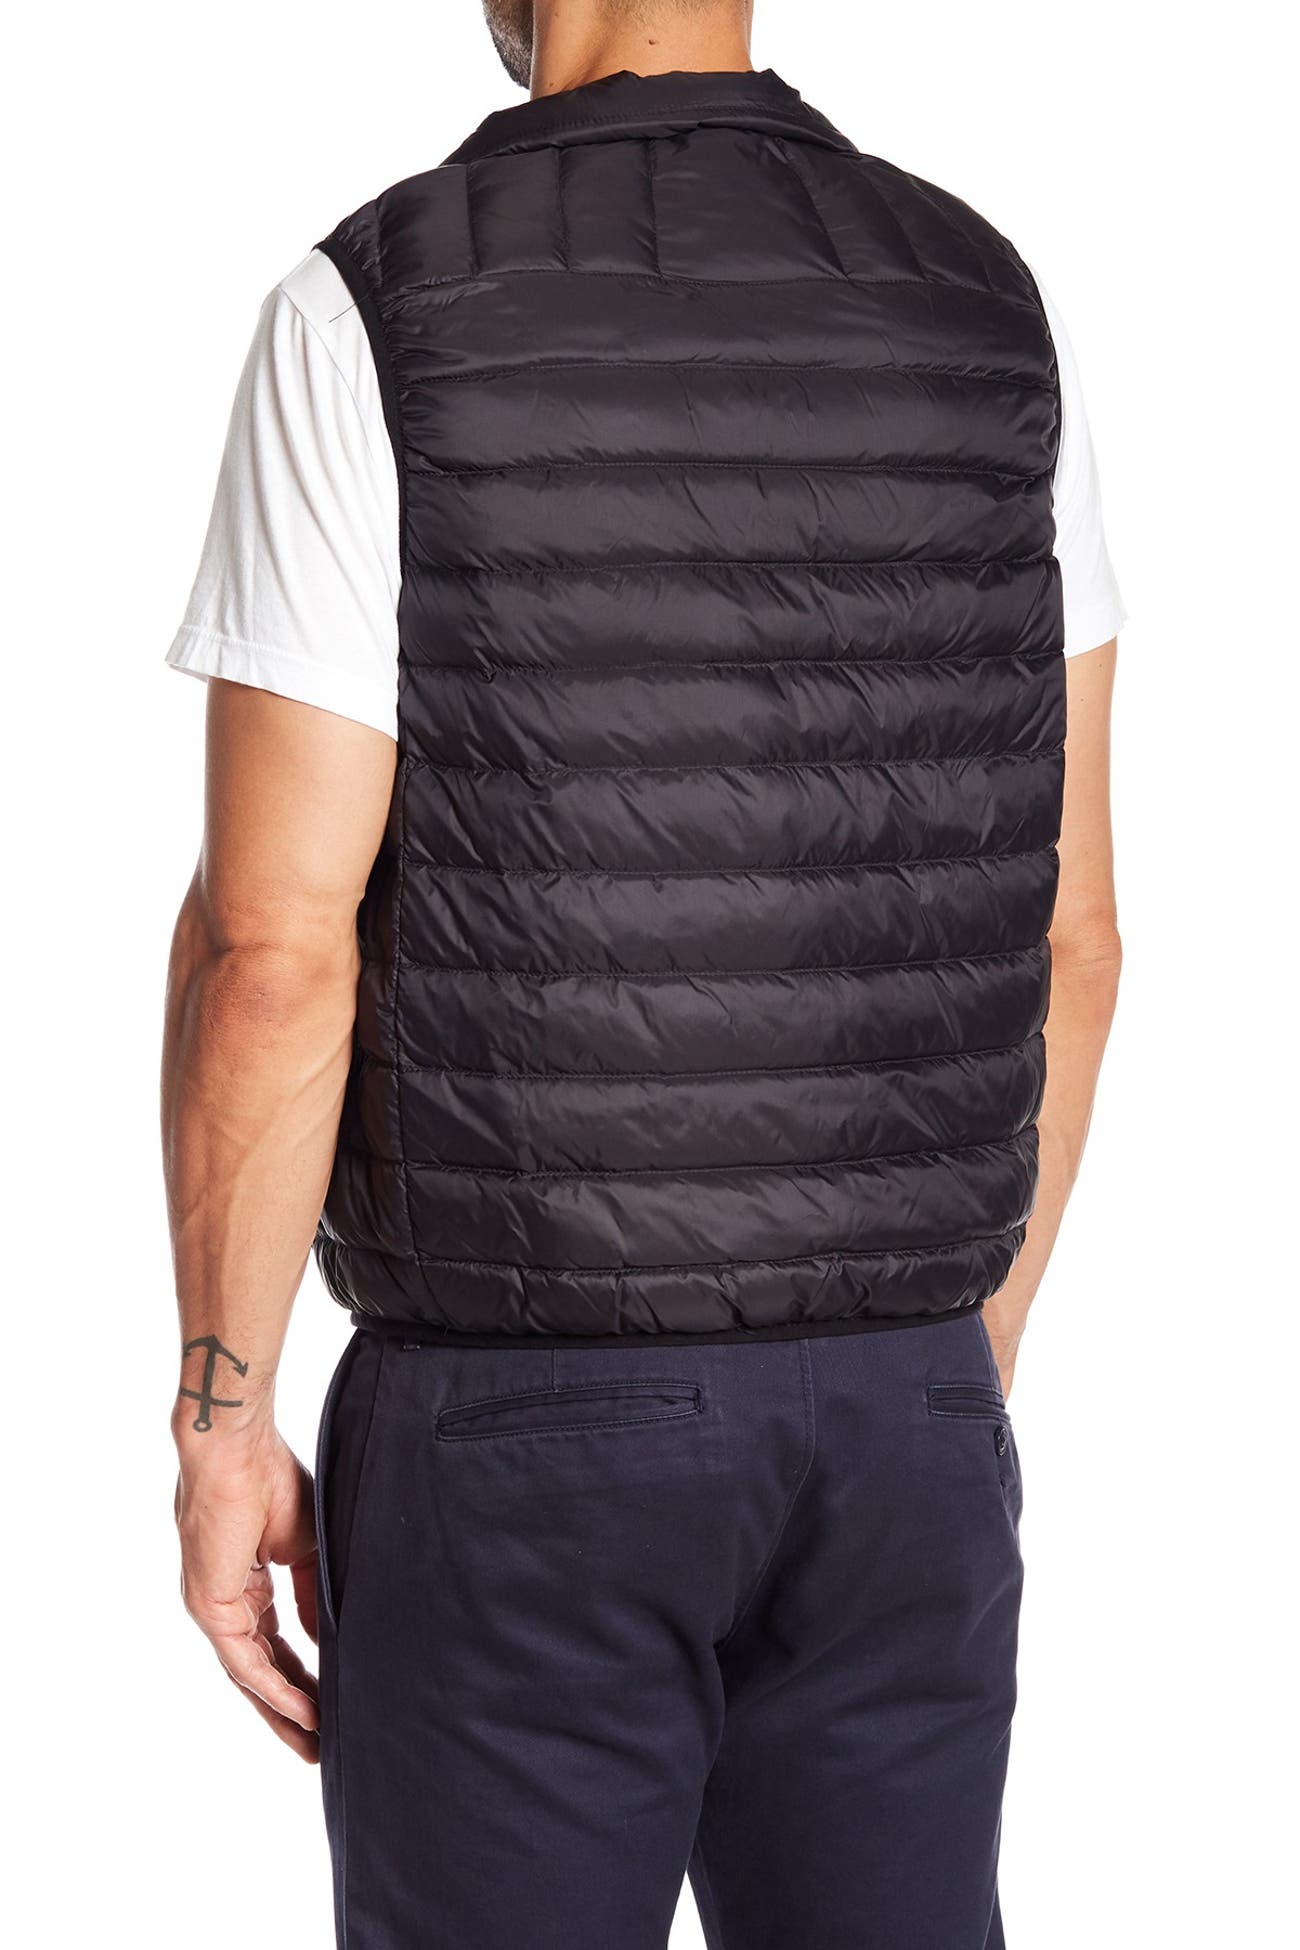 Hawke & Co. | Quilted Packable Down Vest | HauteLook